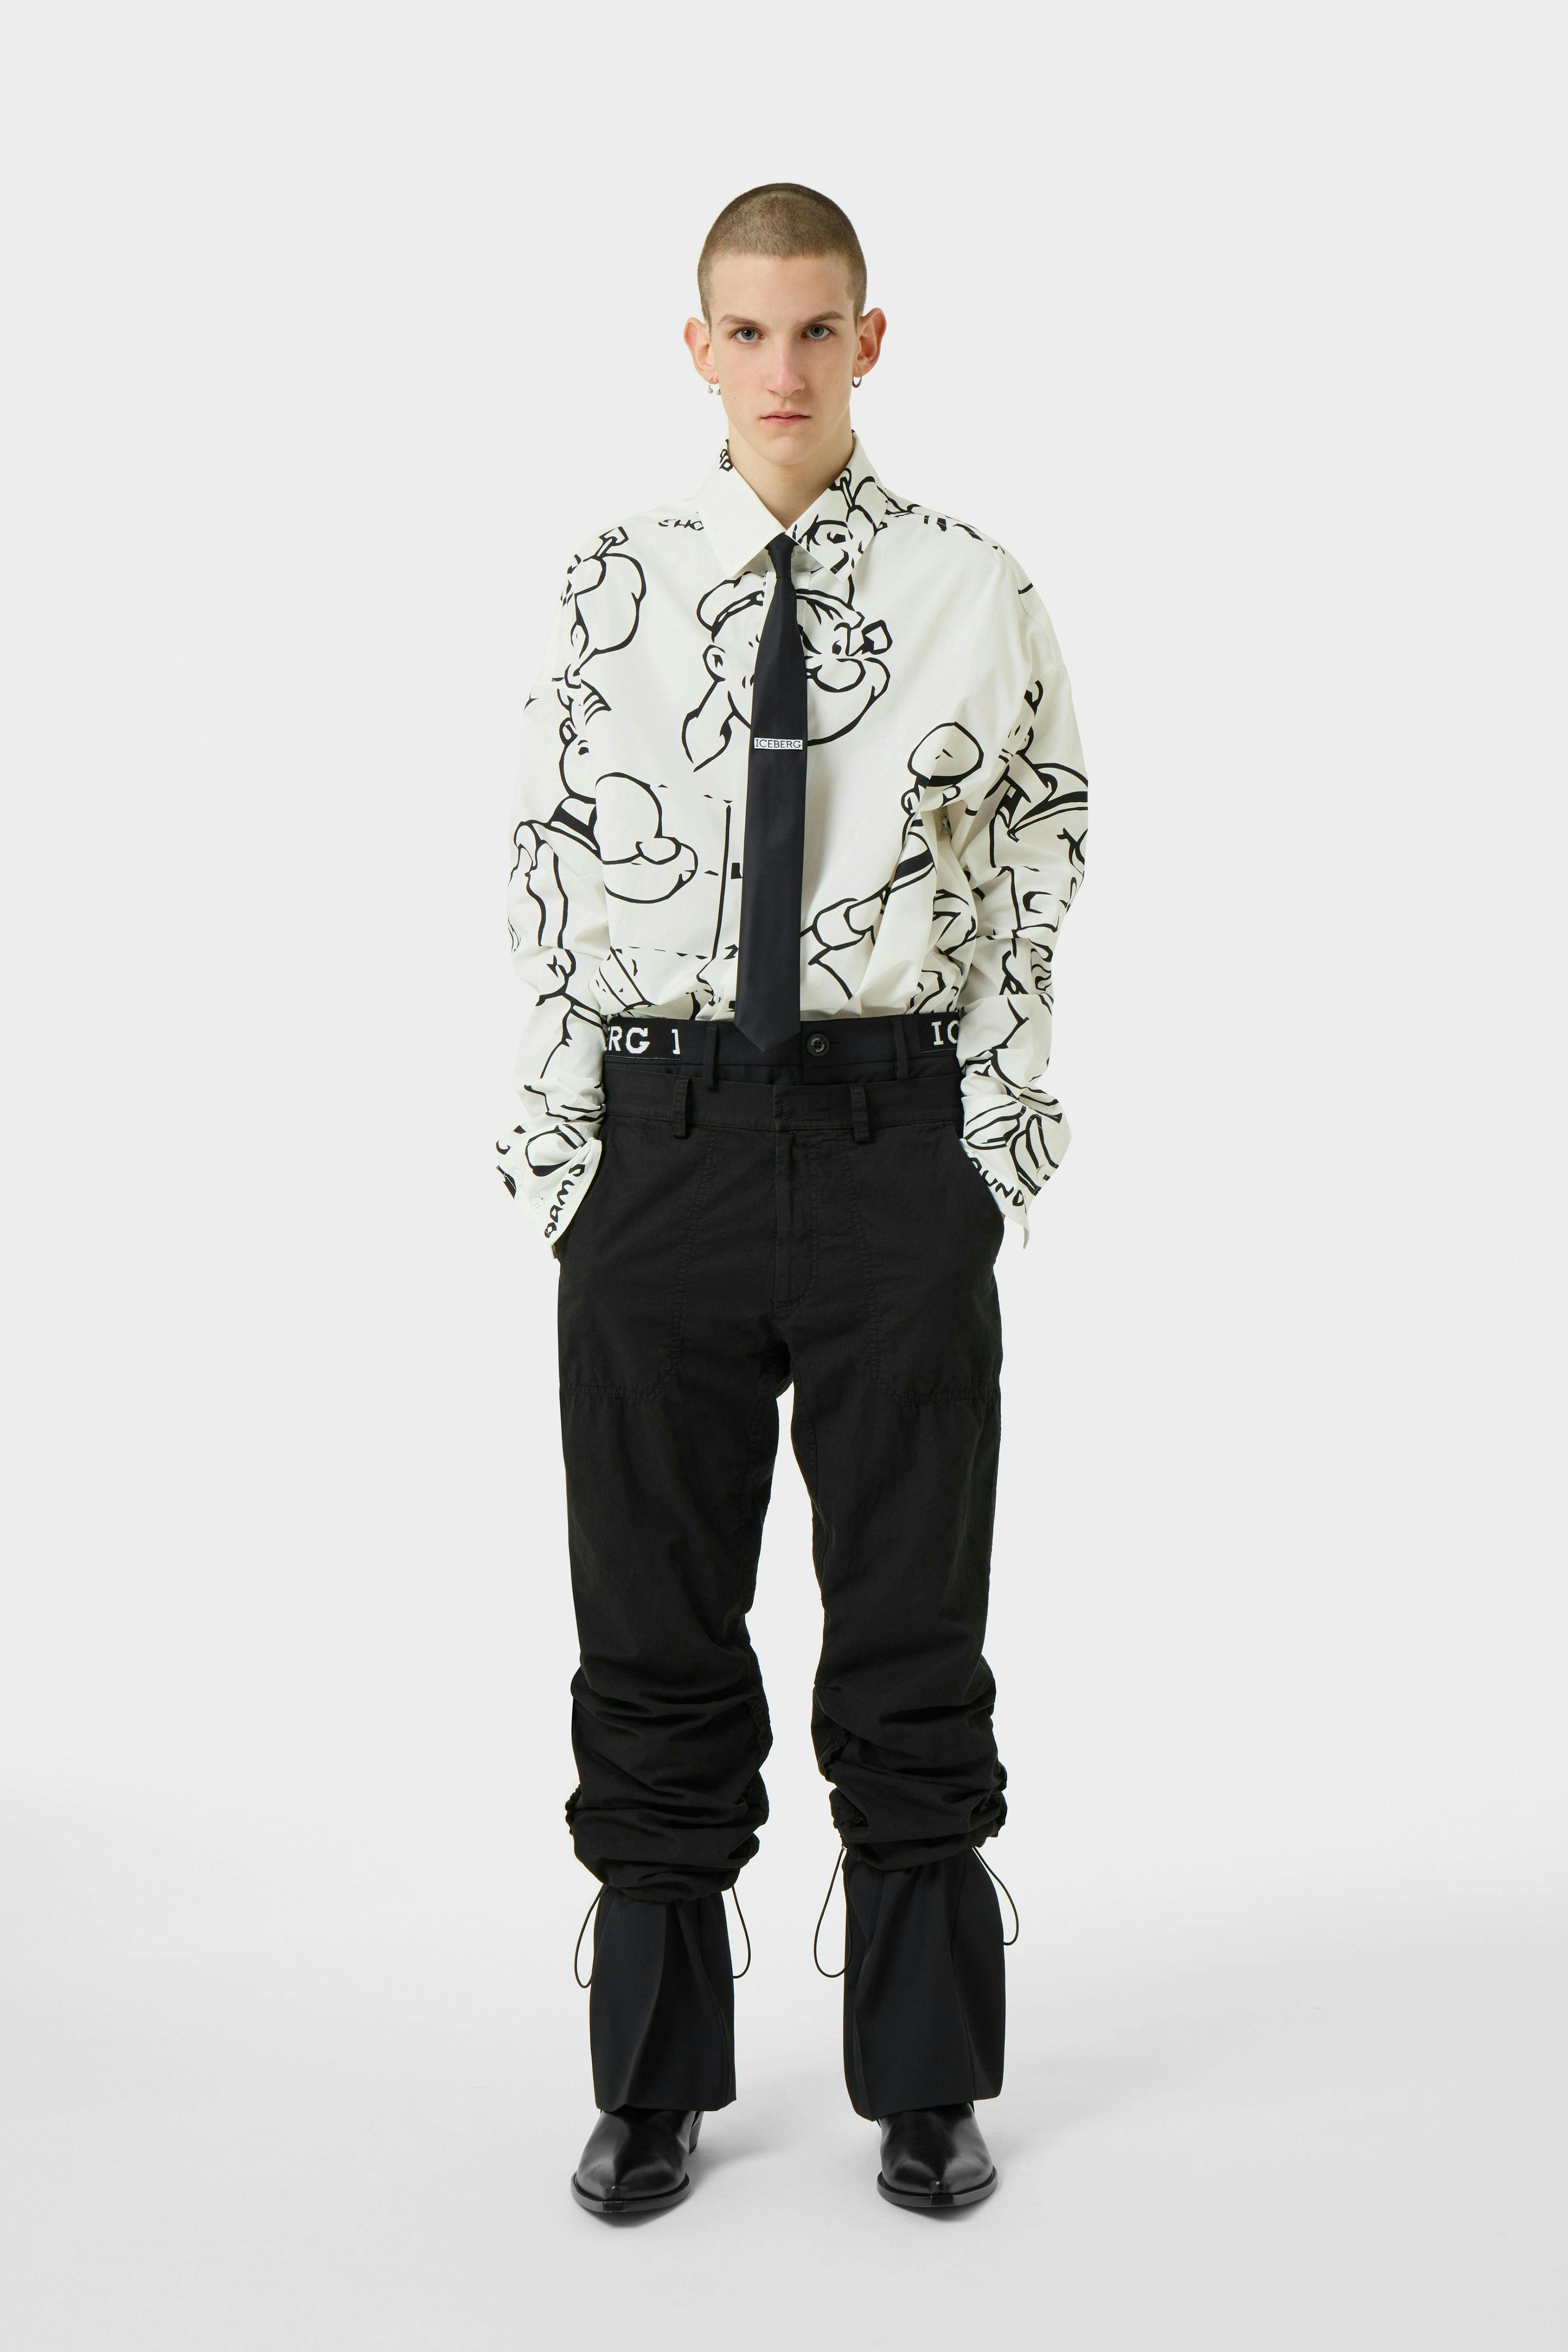 pants clothing apparel person human shirt suspenders